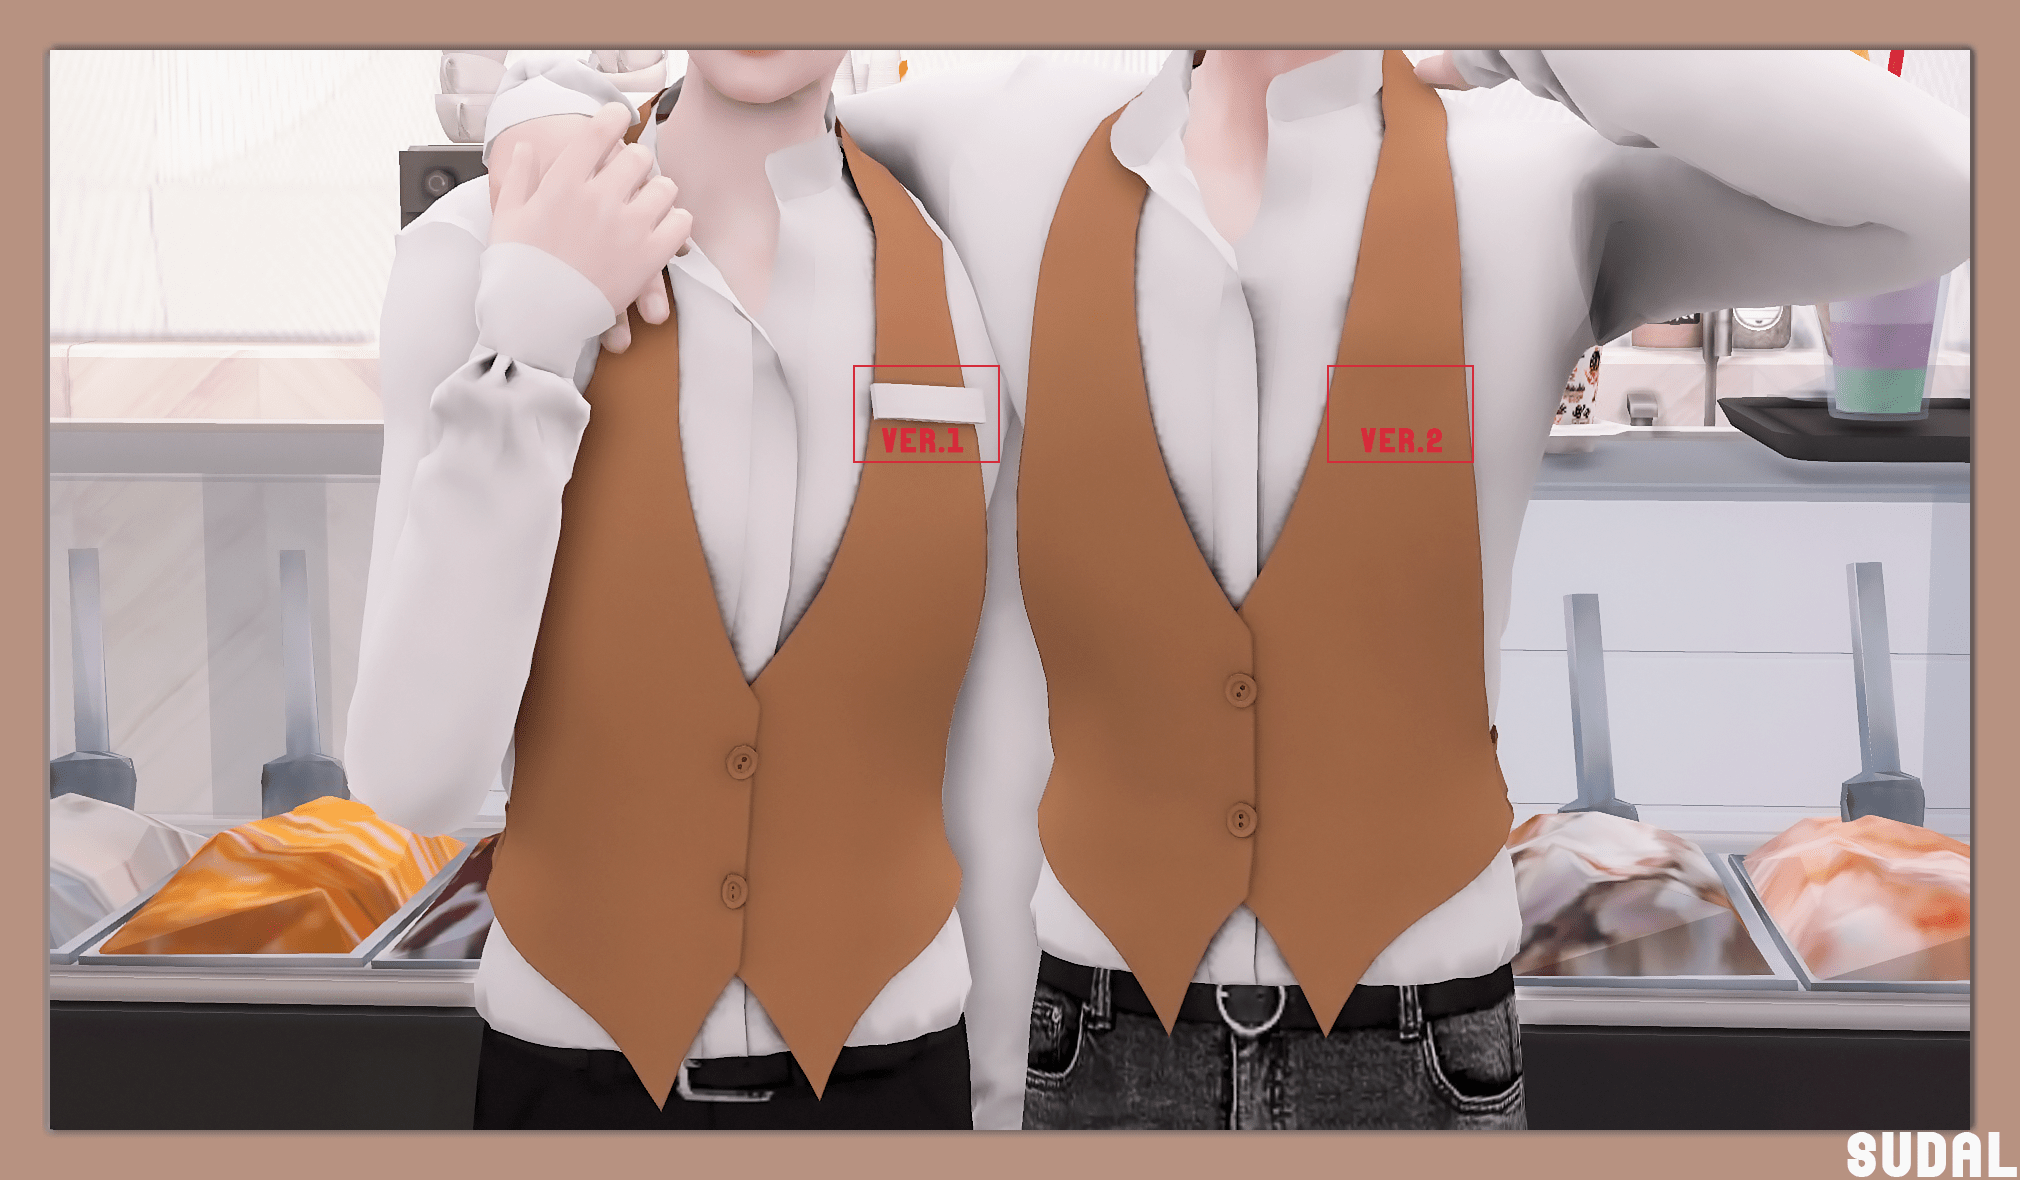 Униформа Cafe & nightclub uniform от sudal для Симс 4